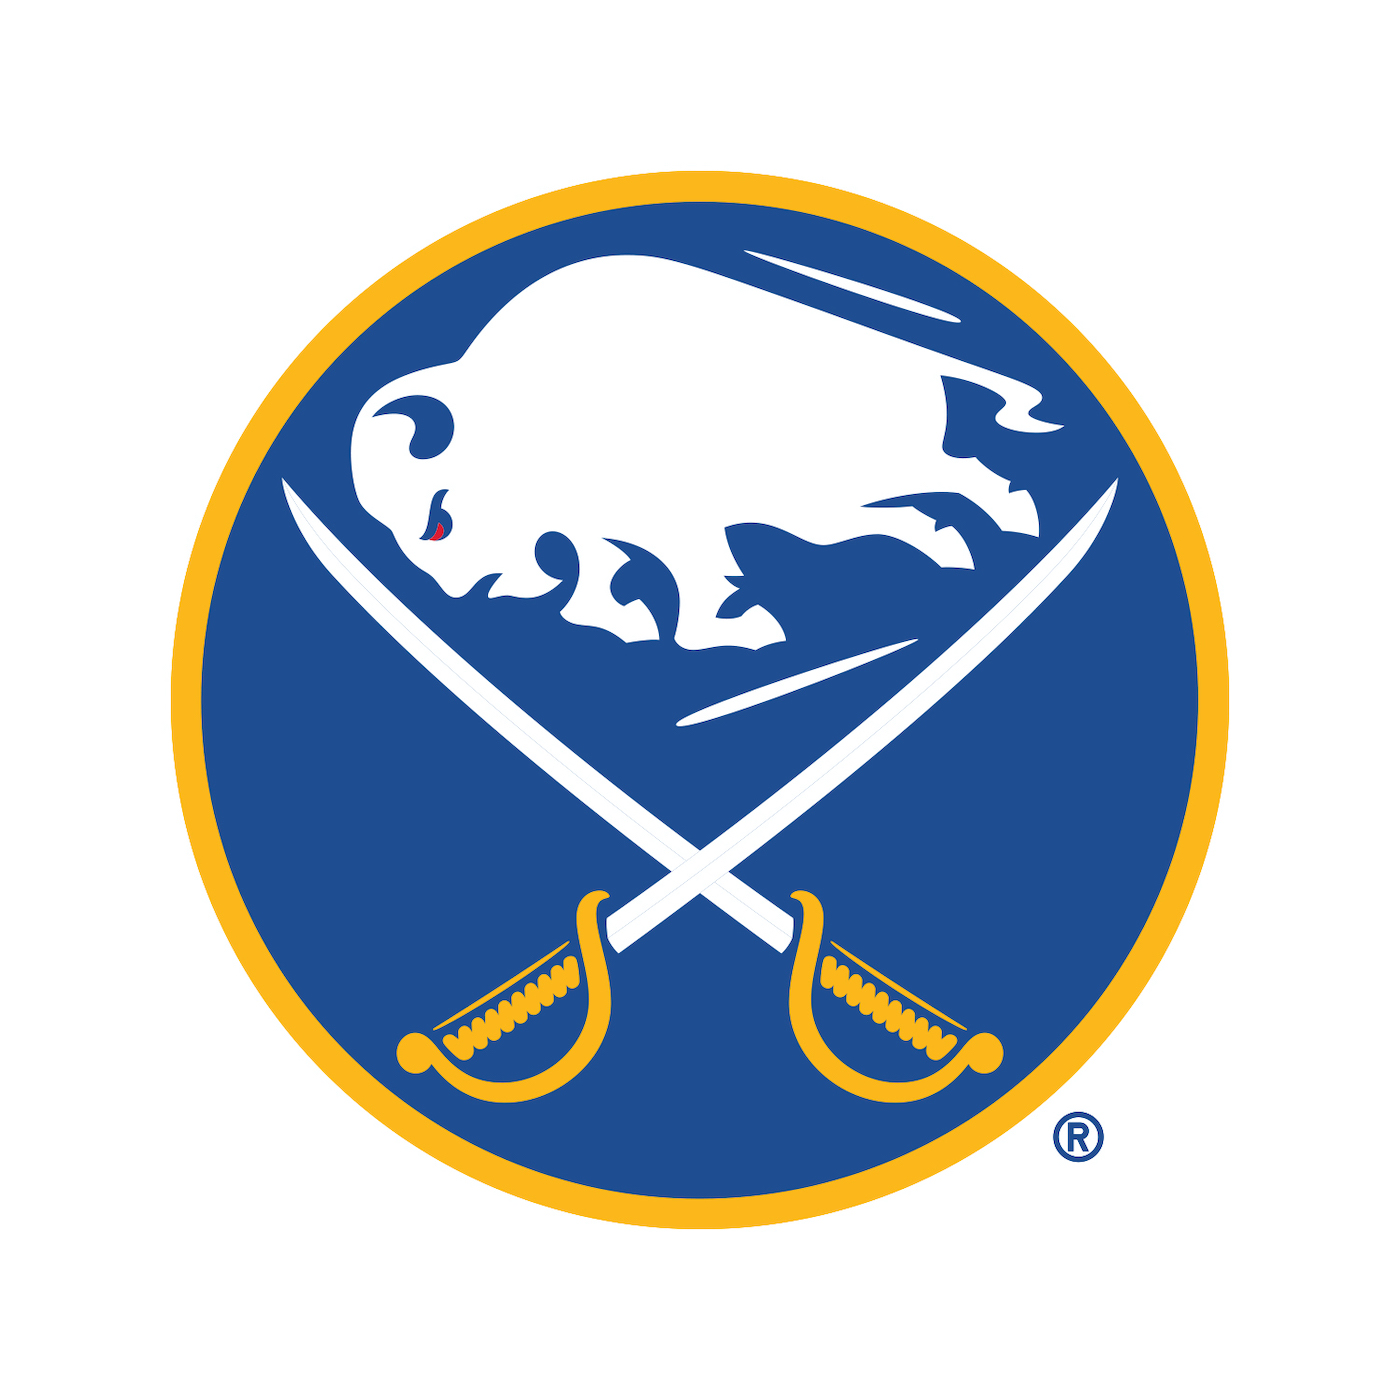 (Buffalo Sabres logo courtesy of and trademark Buffalo Sabres/Pegula Sports and Entertainment)